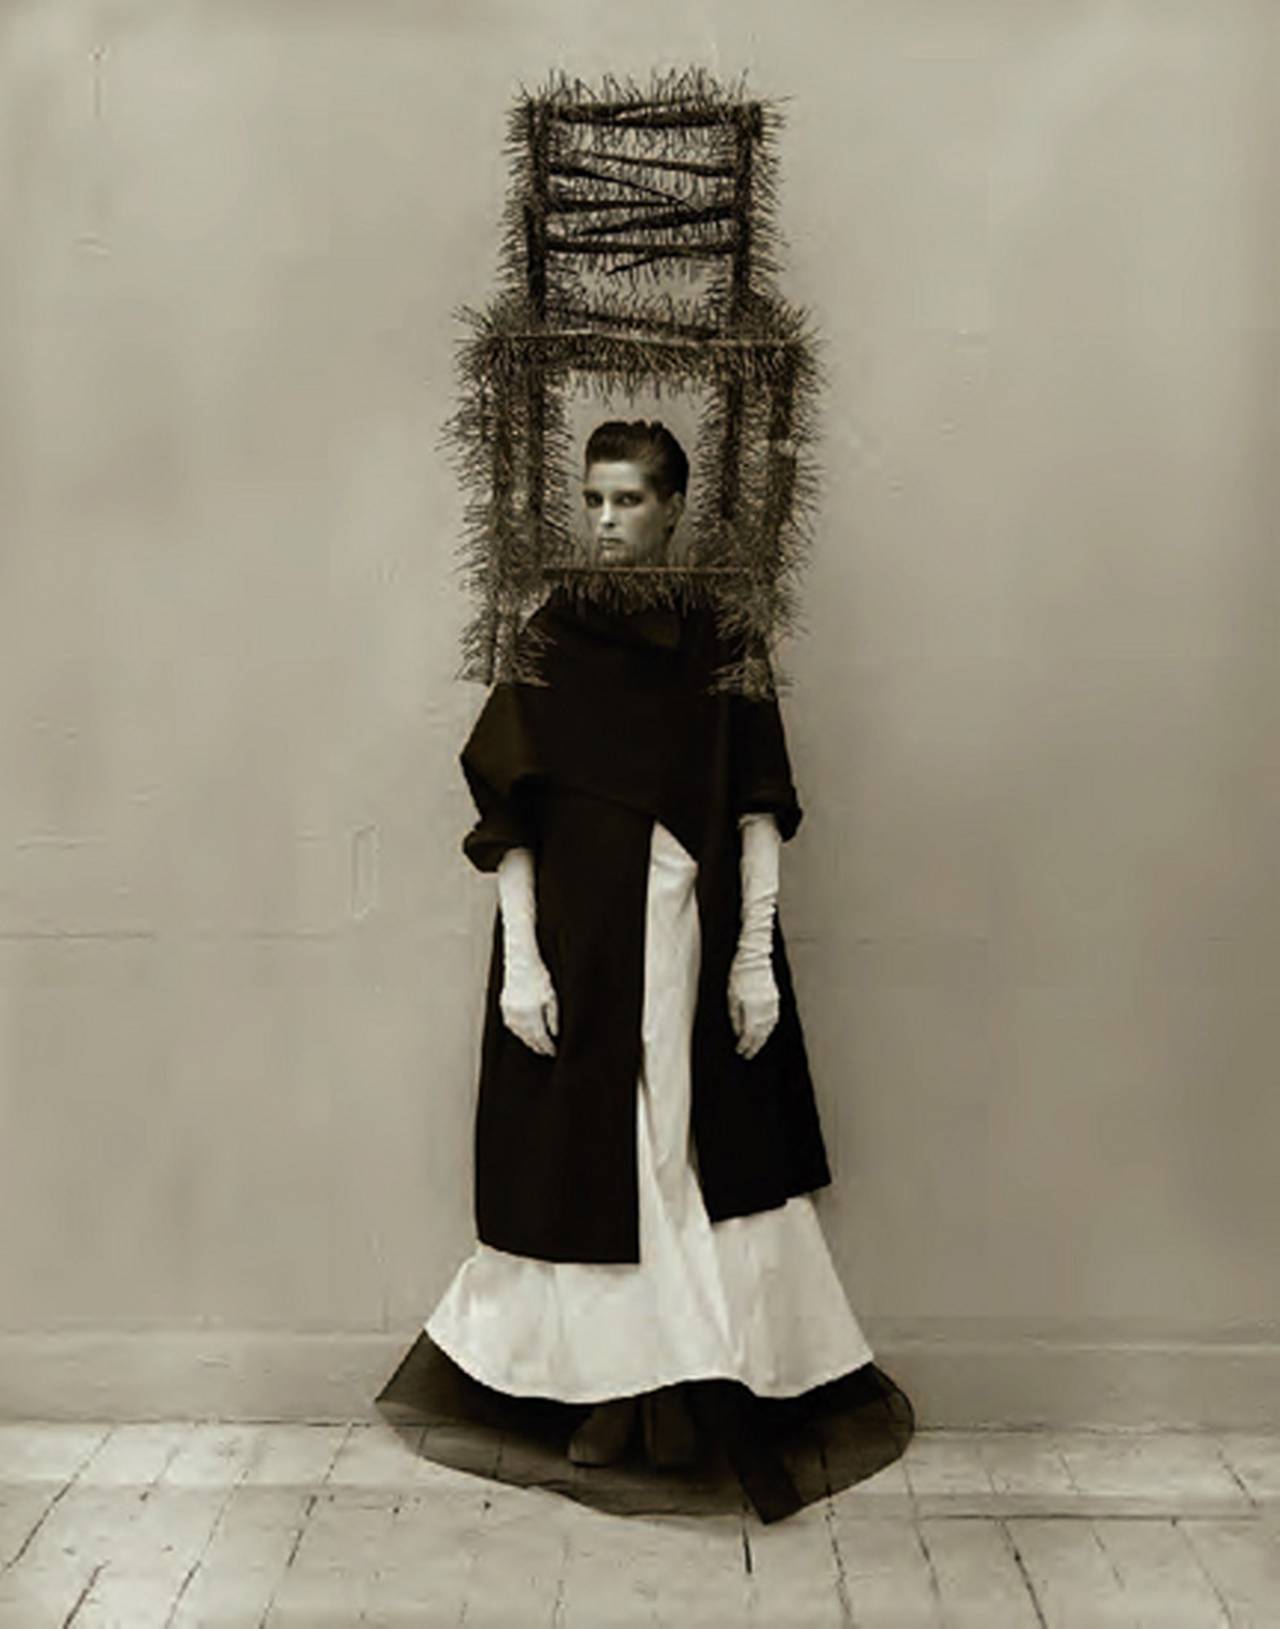 Albert Watson Black and White Photograph - Leslie Winer, Royal College of Art, London